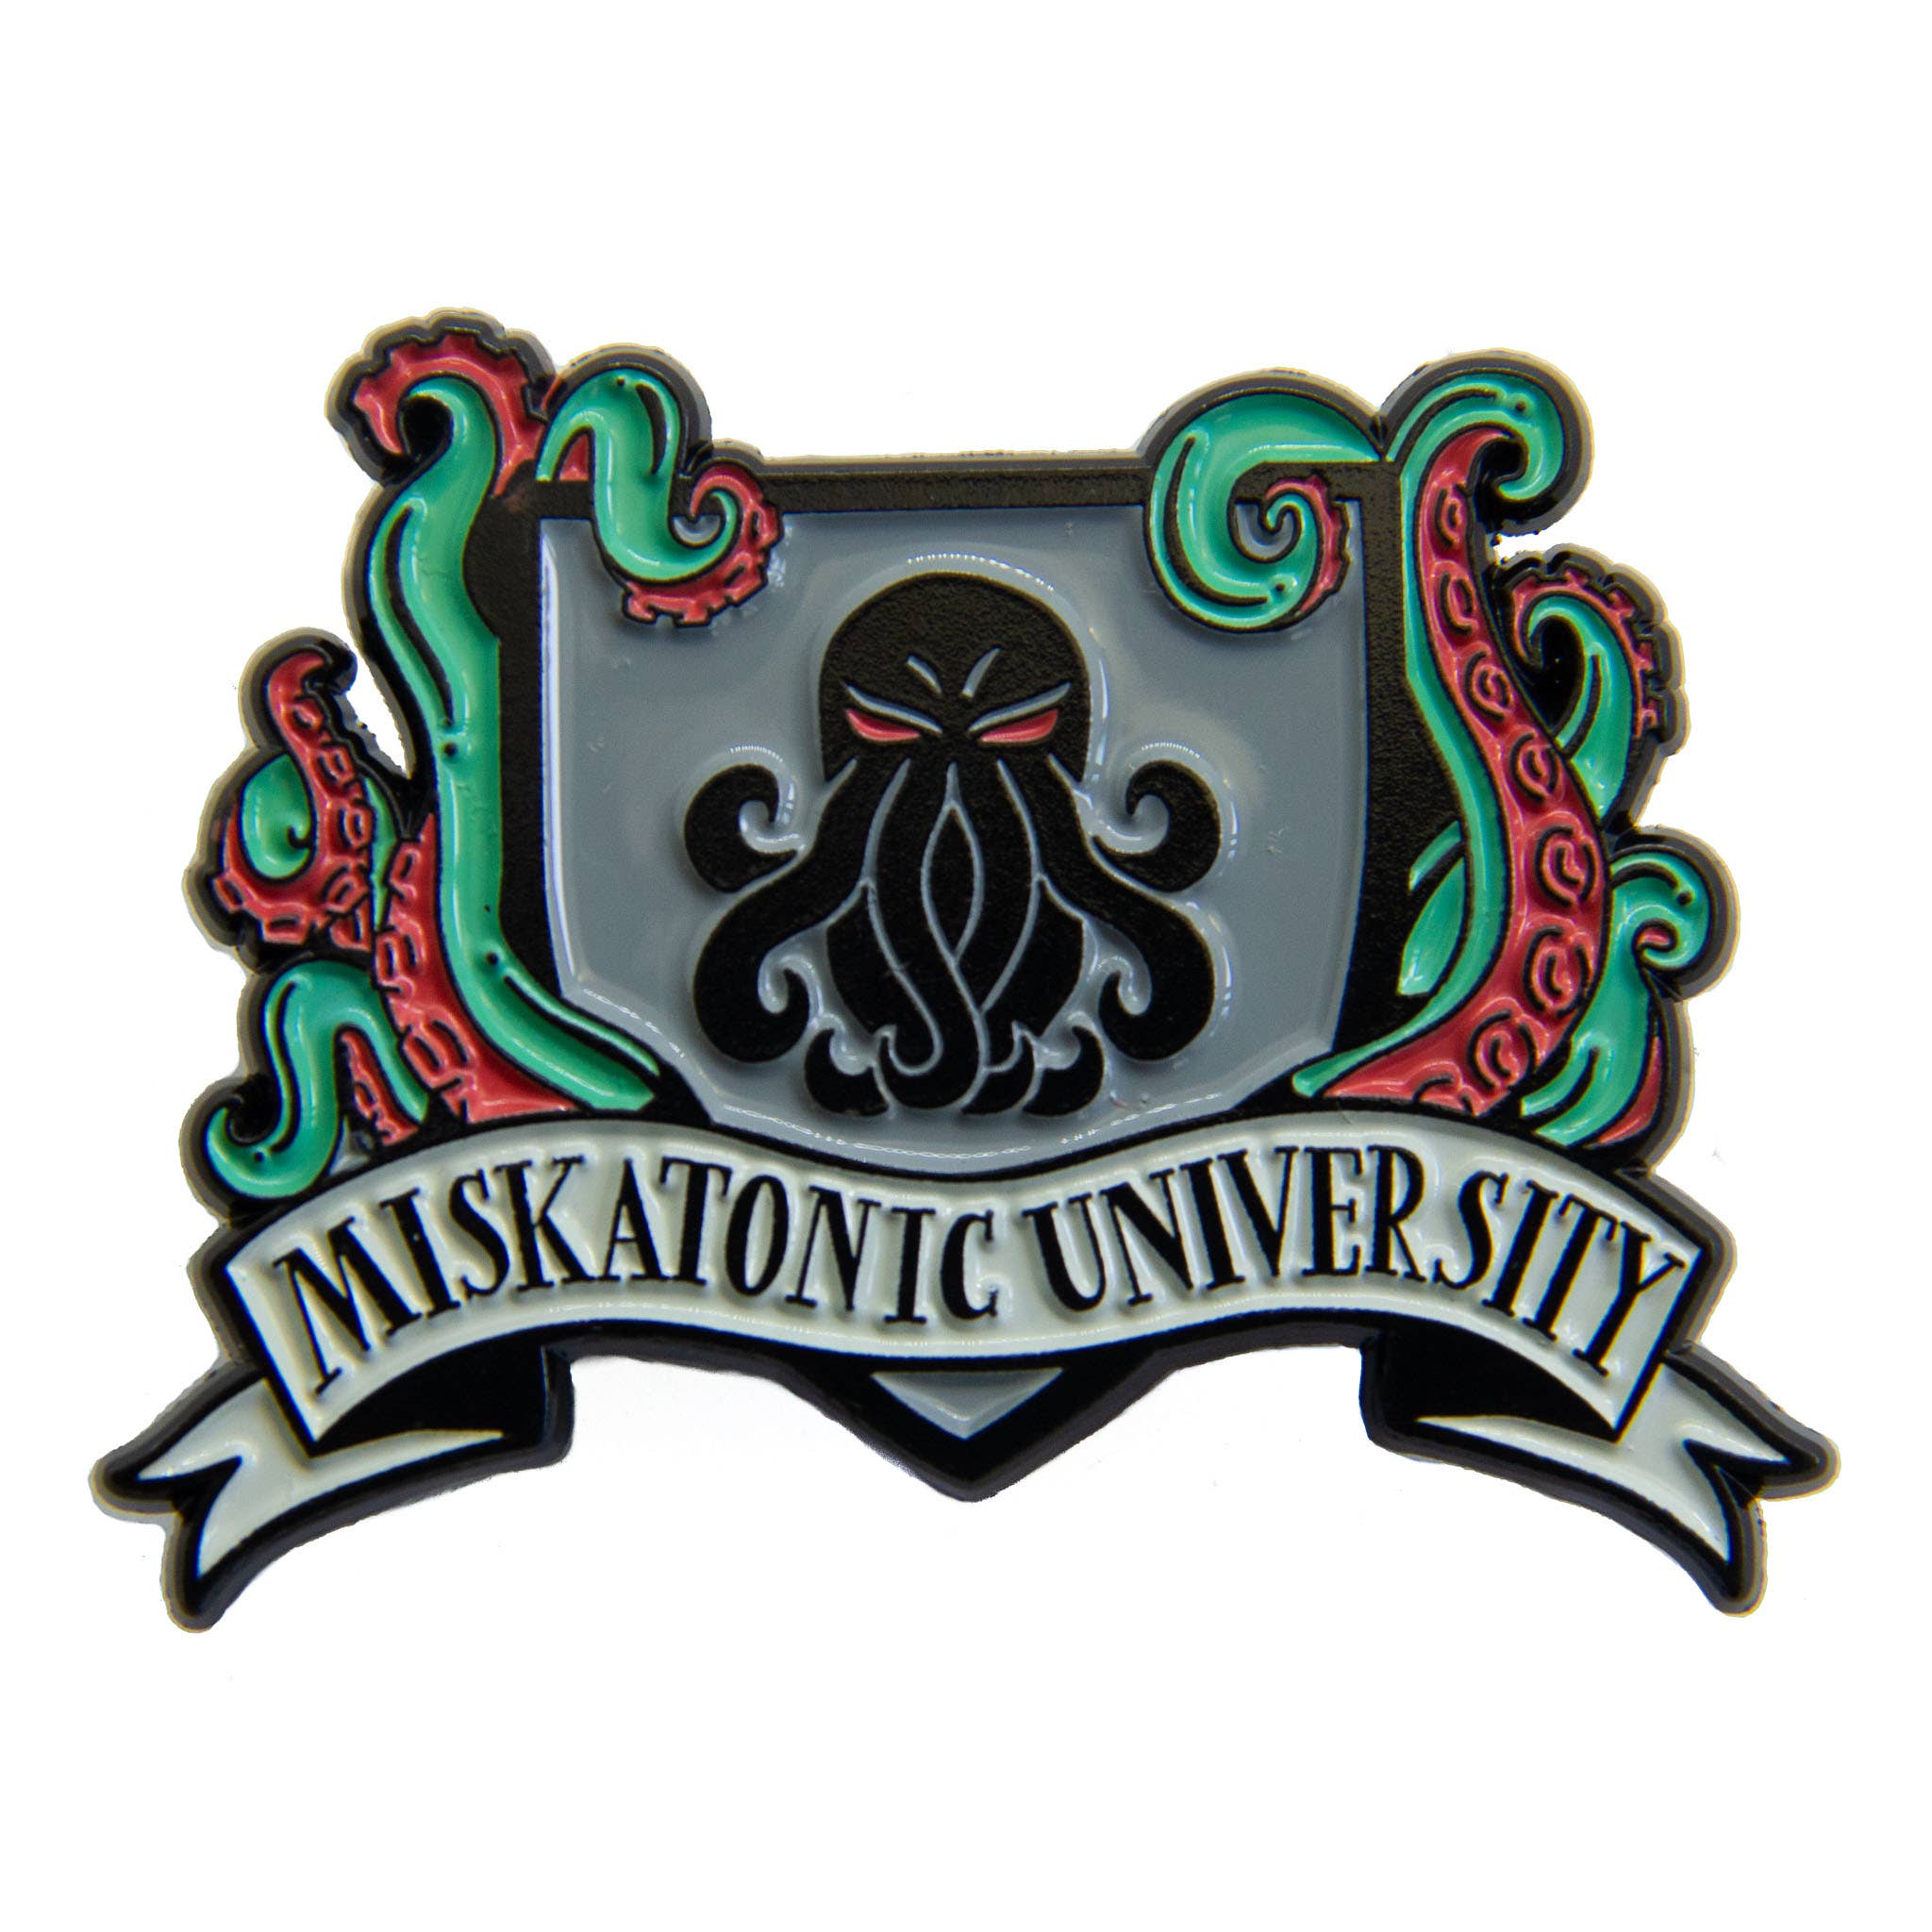 "Miskatonic University" H.P. Lovecraft Enamel Pin